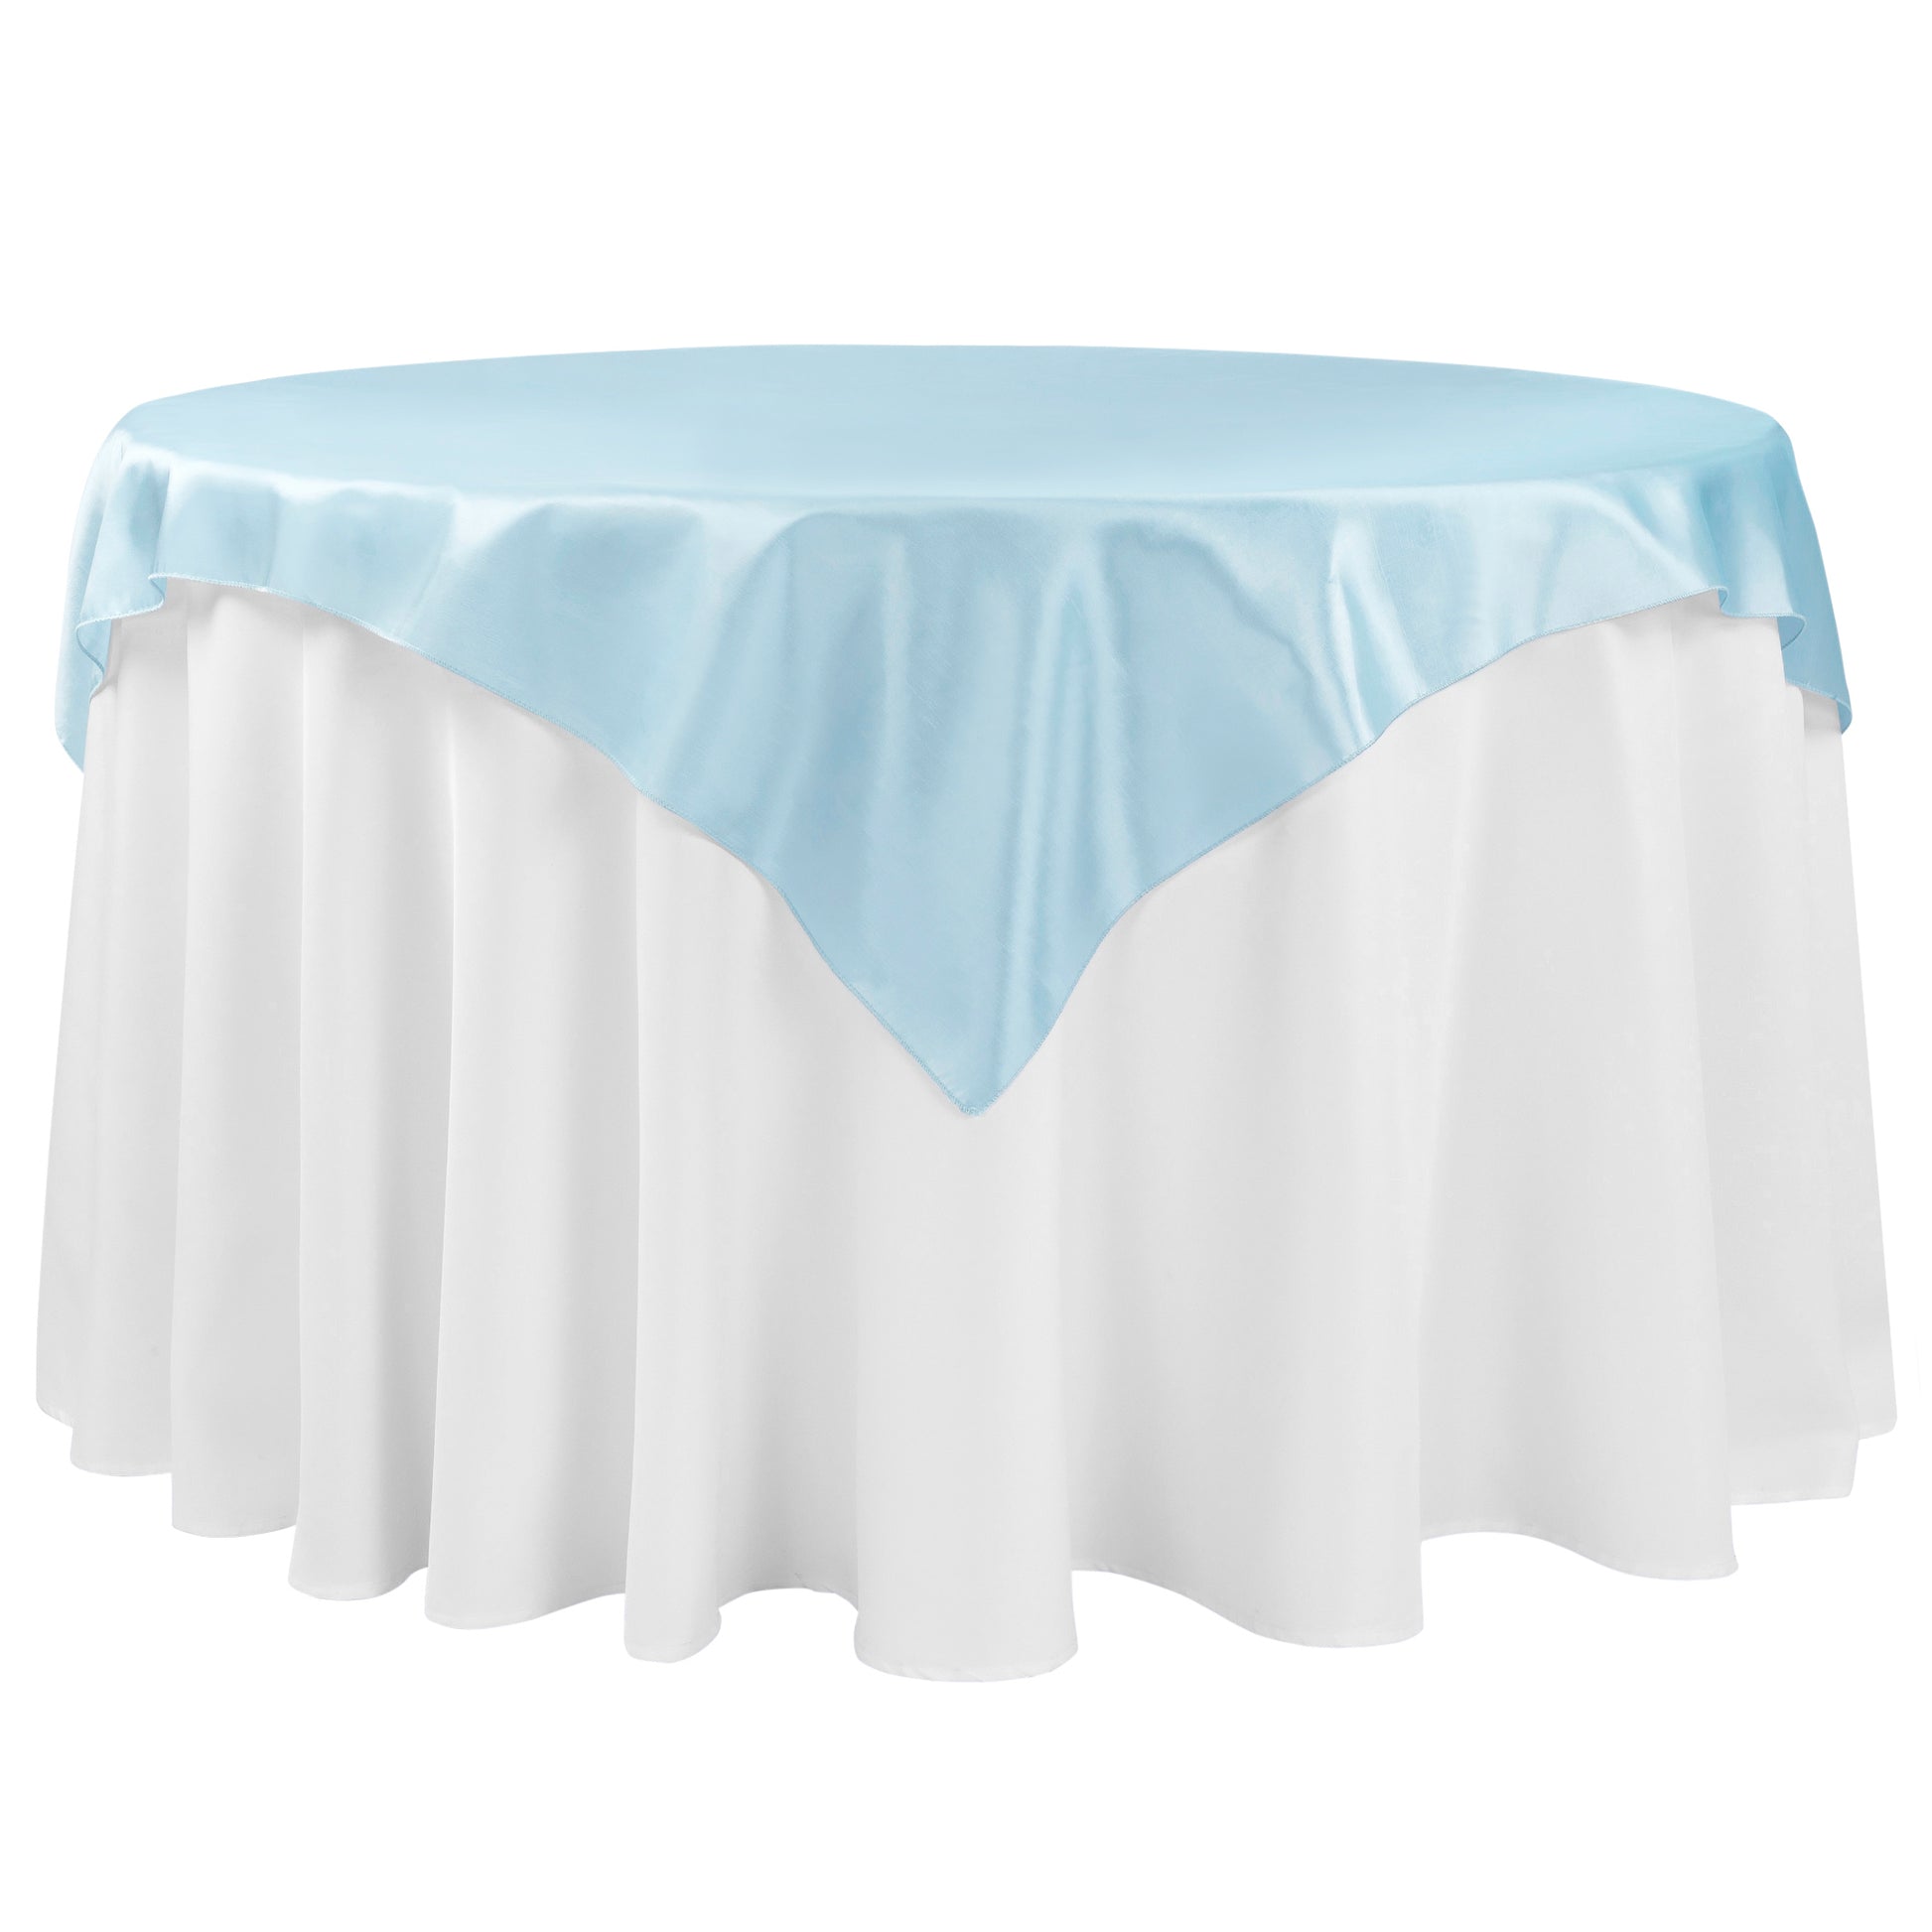 Taffeta Table Overlay Topper 54"x54" Square - Baby Blue - CV Linens